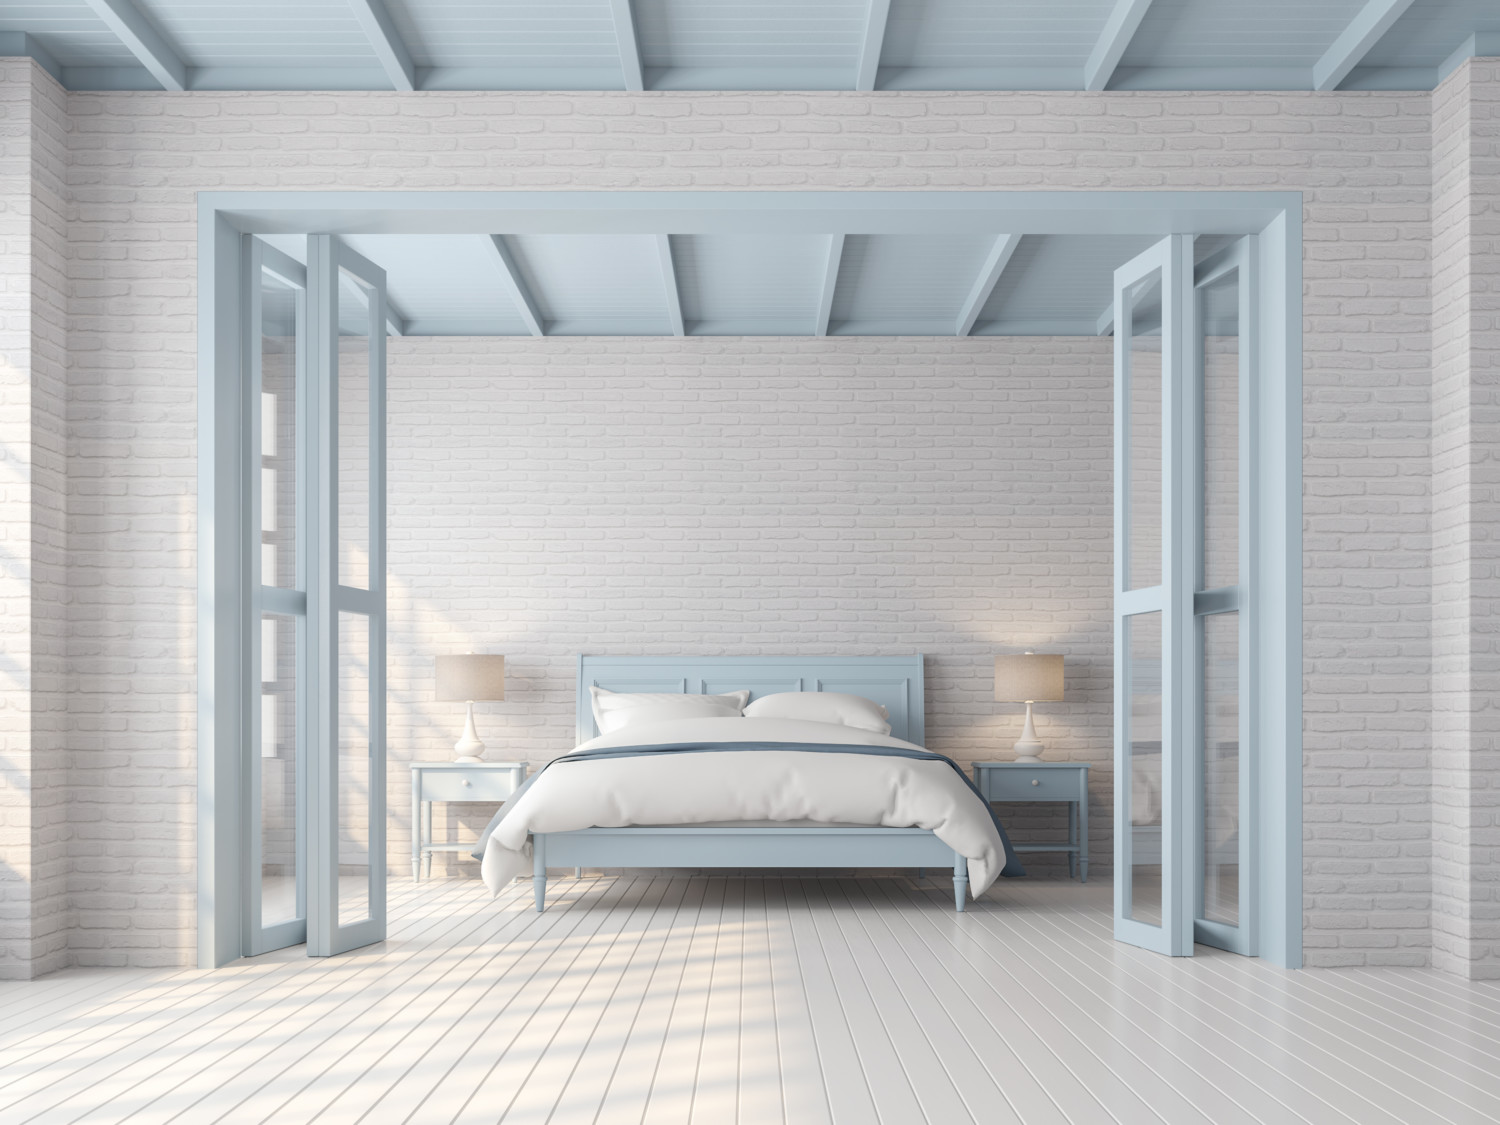 Bed in bedroom with open French doors